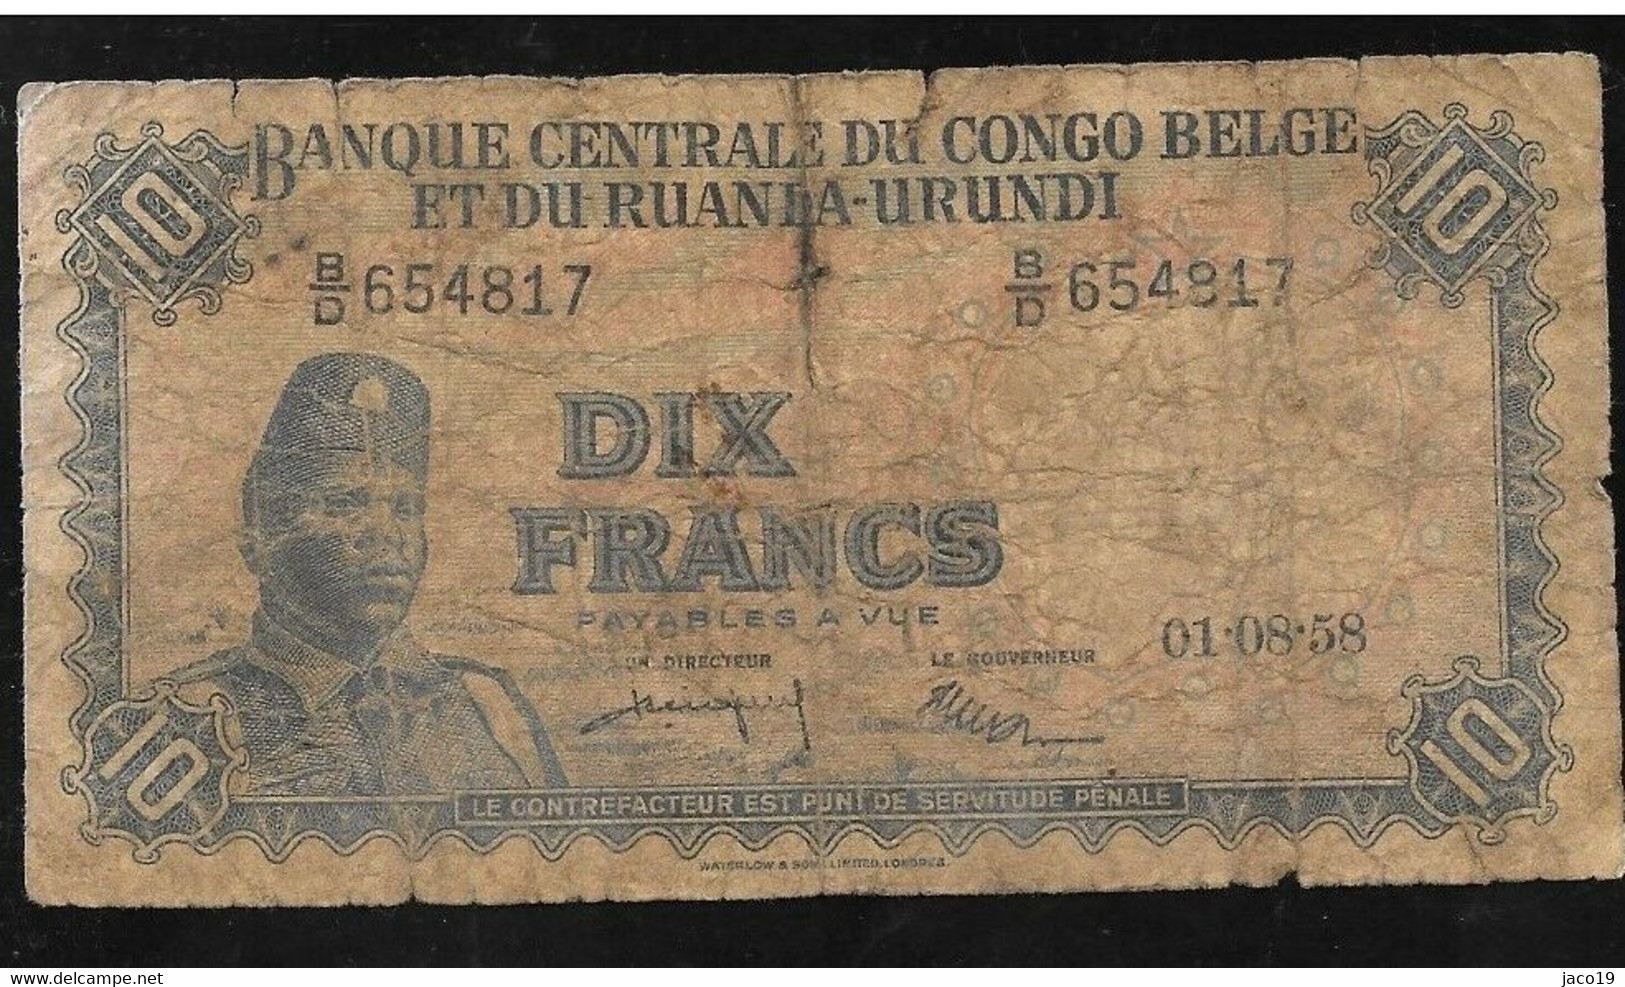 10 Francs -congo-belge Type "1955" 01-08-58 - Banco De Congo Belga